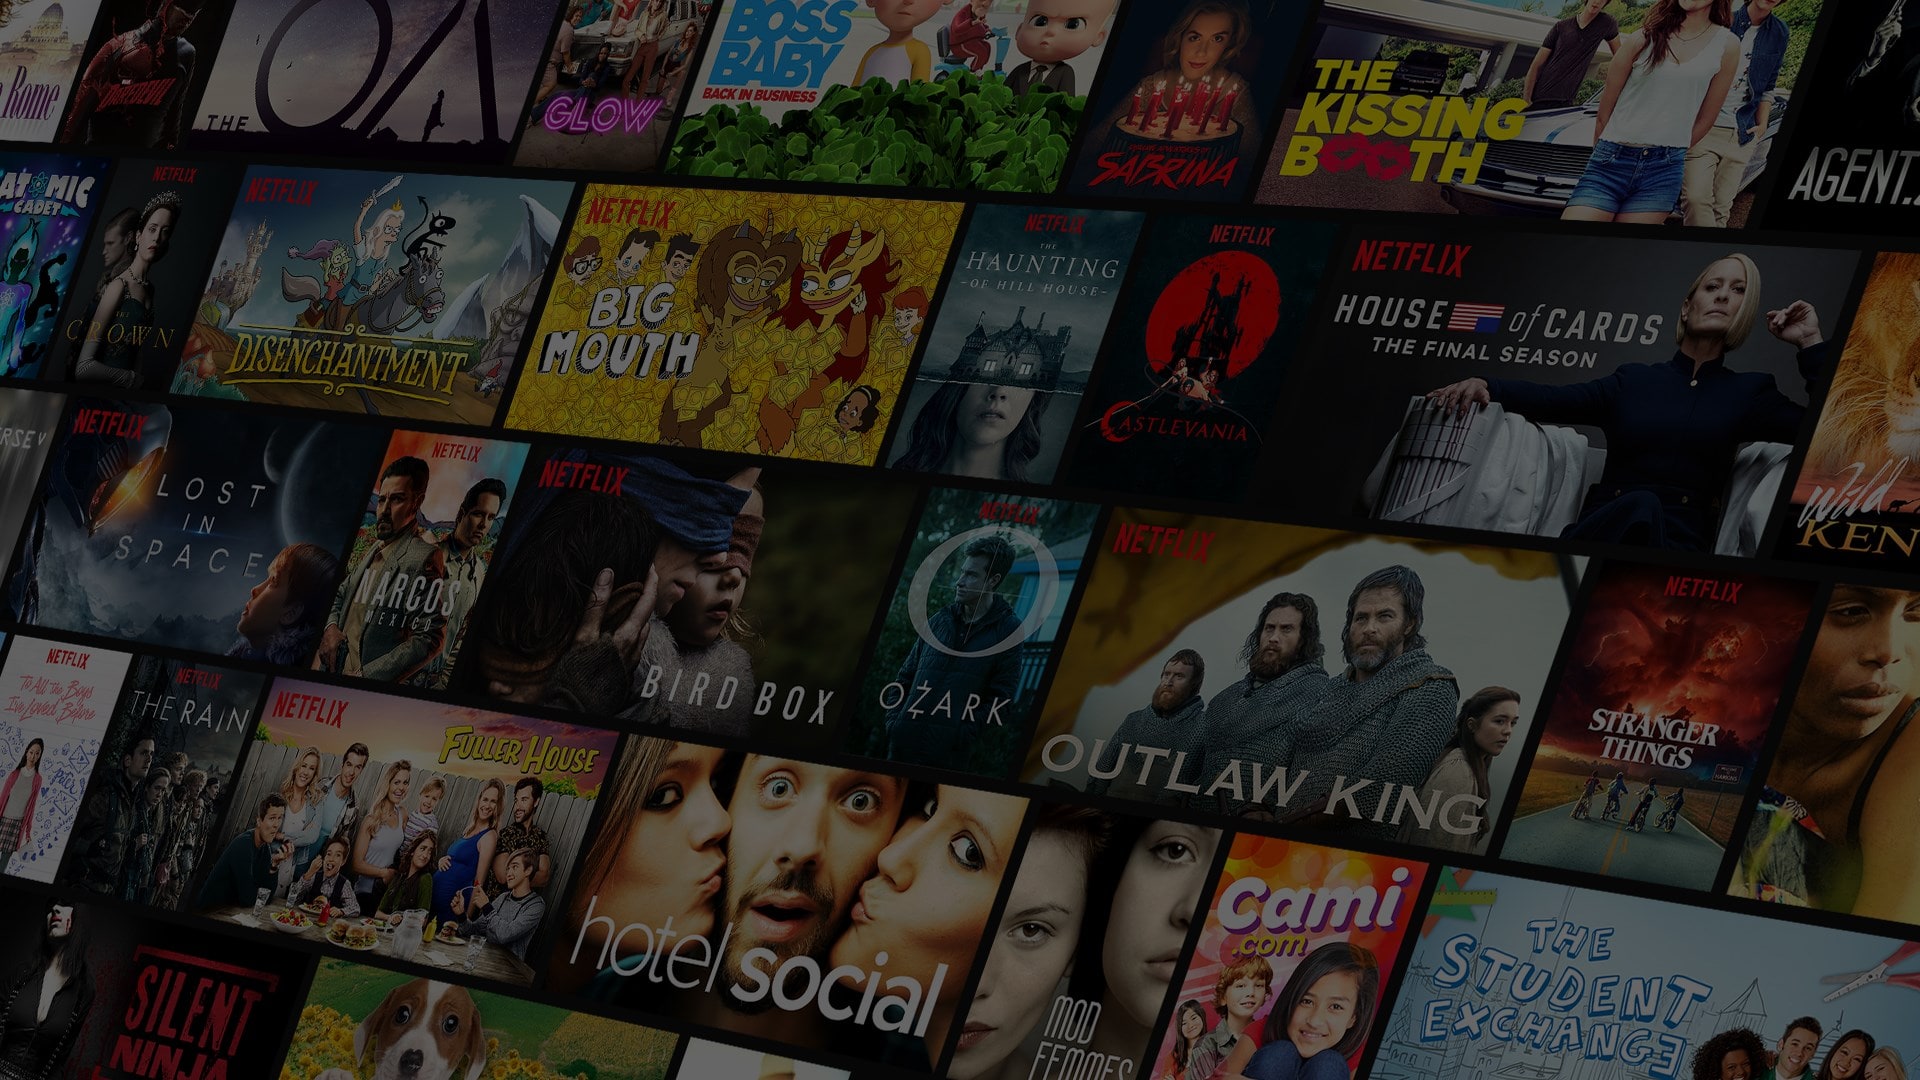 Netflix download cost - jenolcaddy